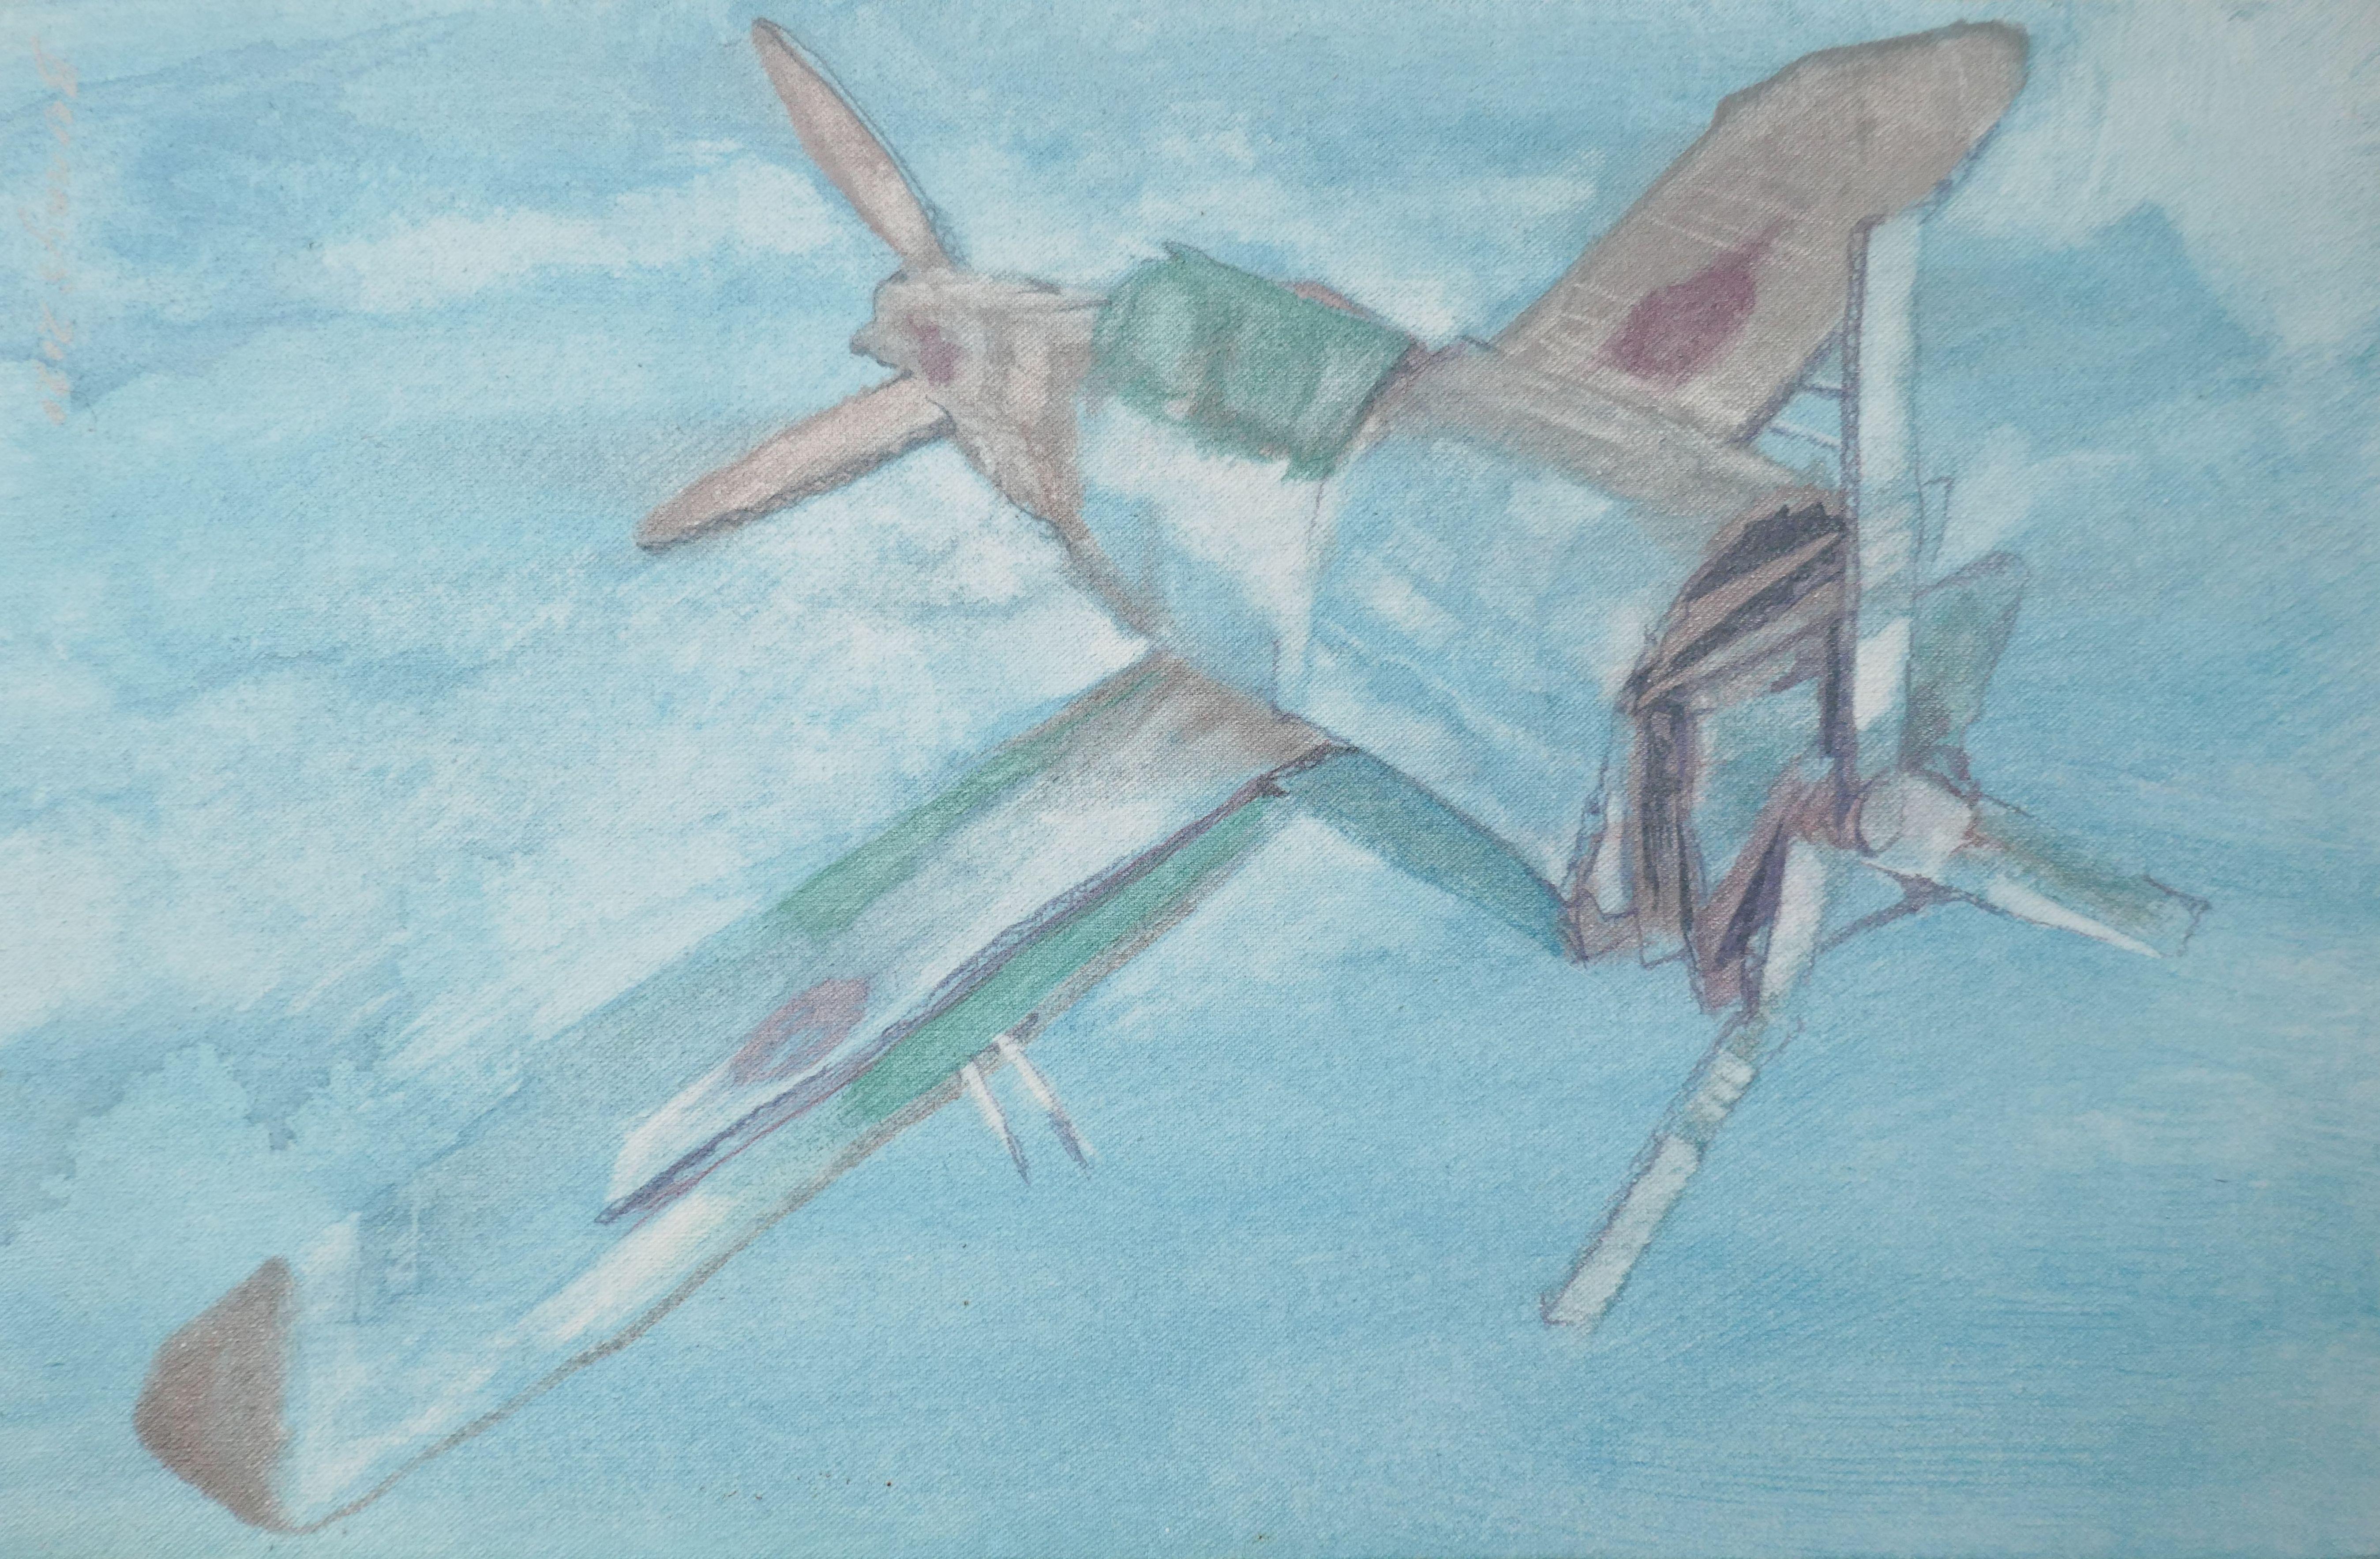 Cardboard Airplane, Painting, Acrylic on Canvas